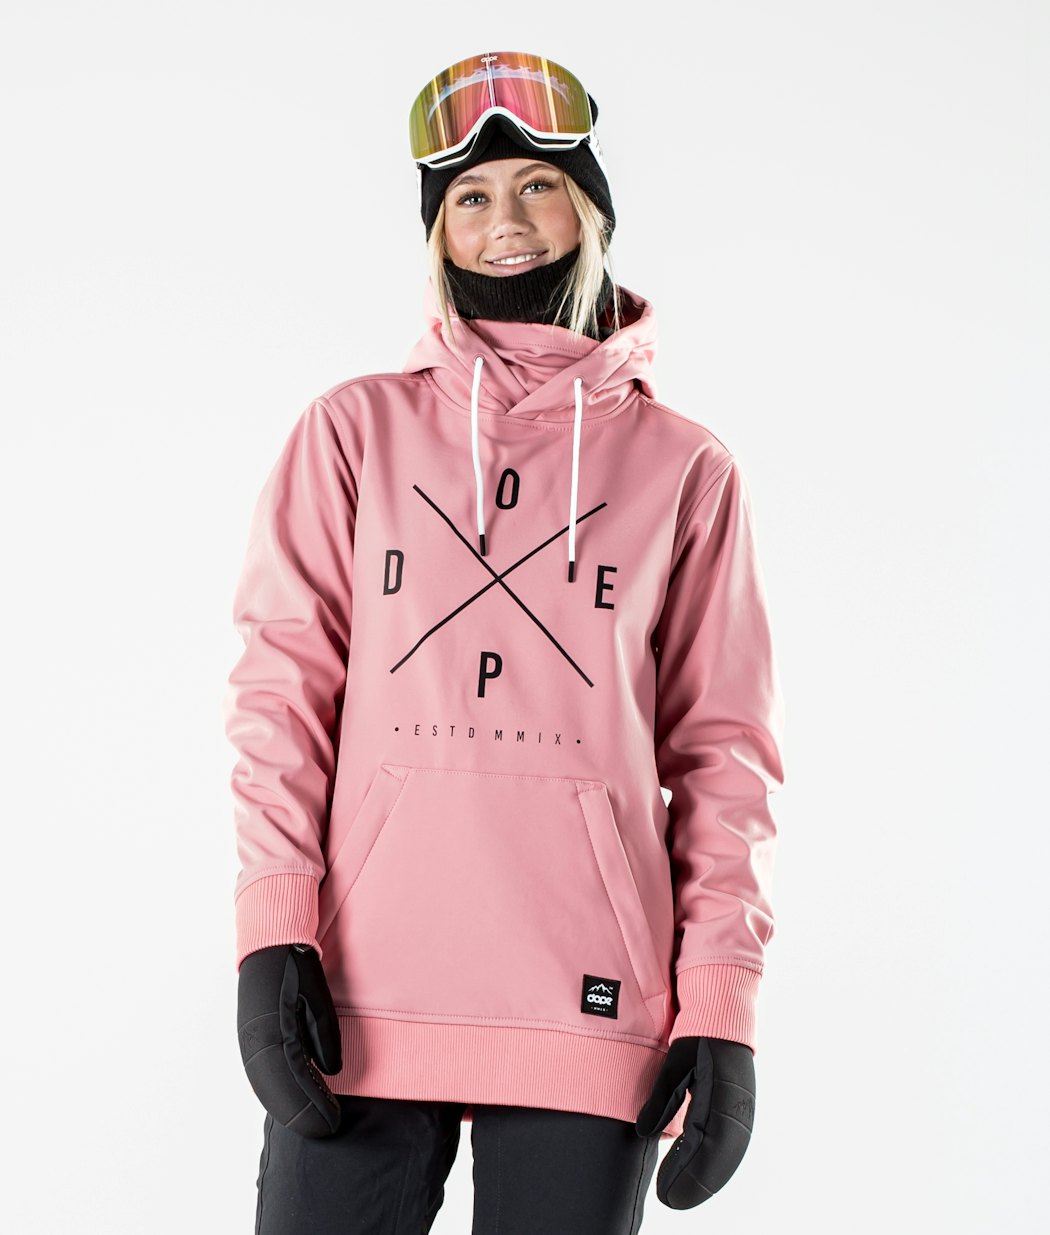 Yeti W 10k Snowboard Jacket Women Pink